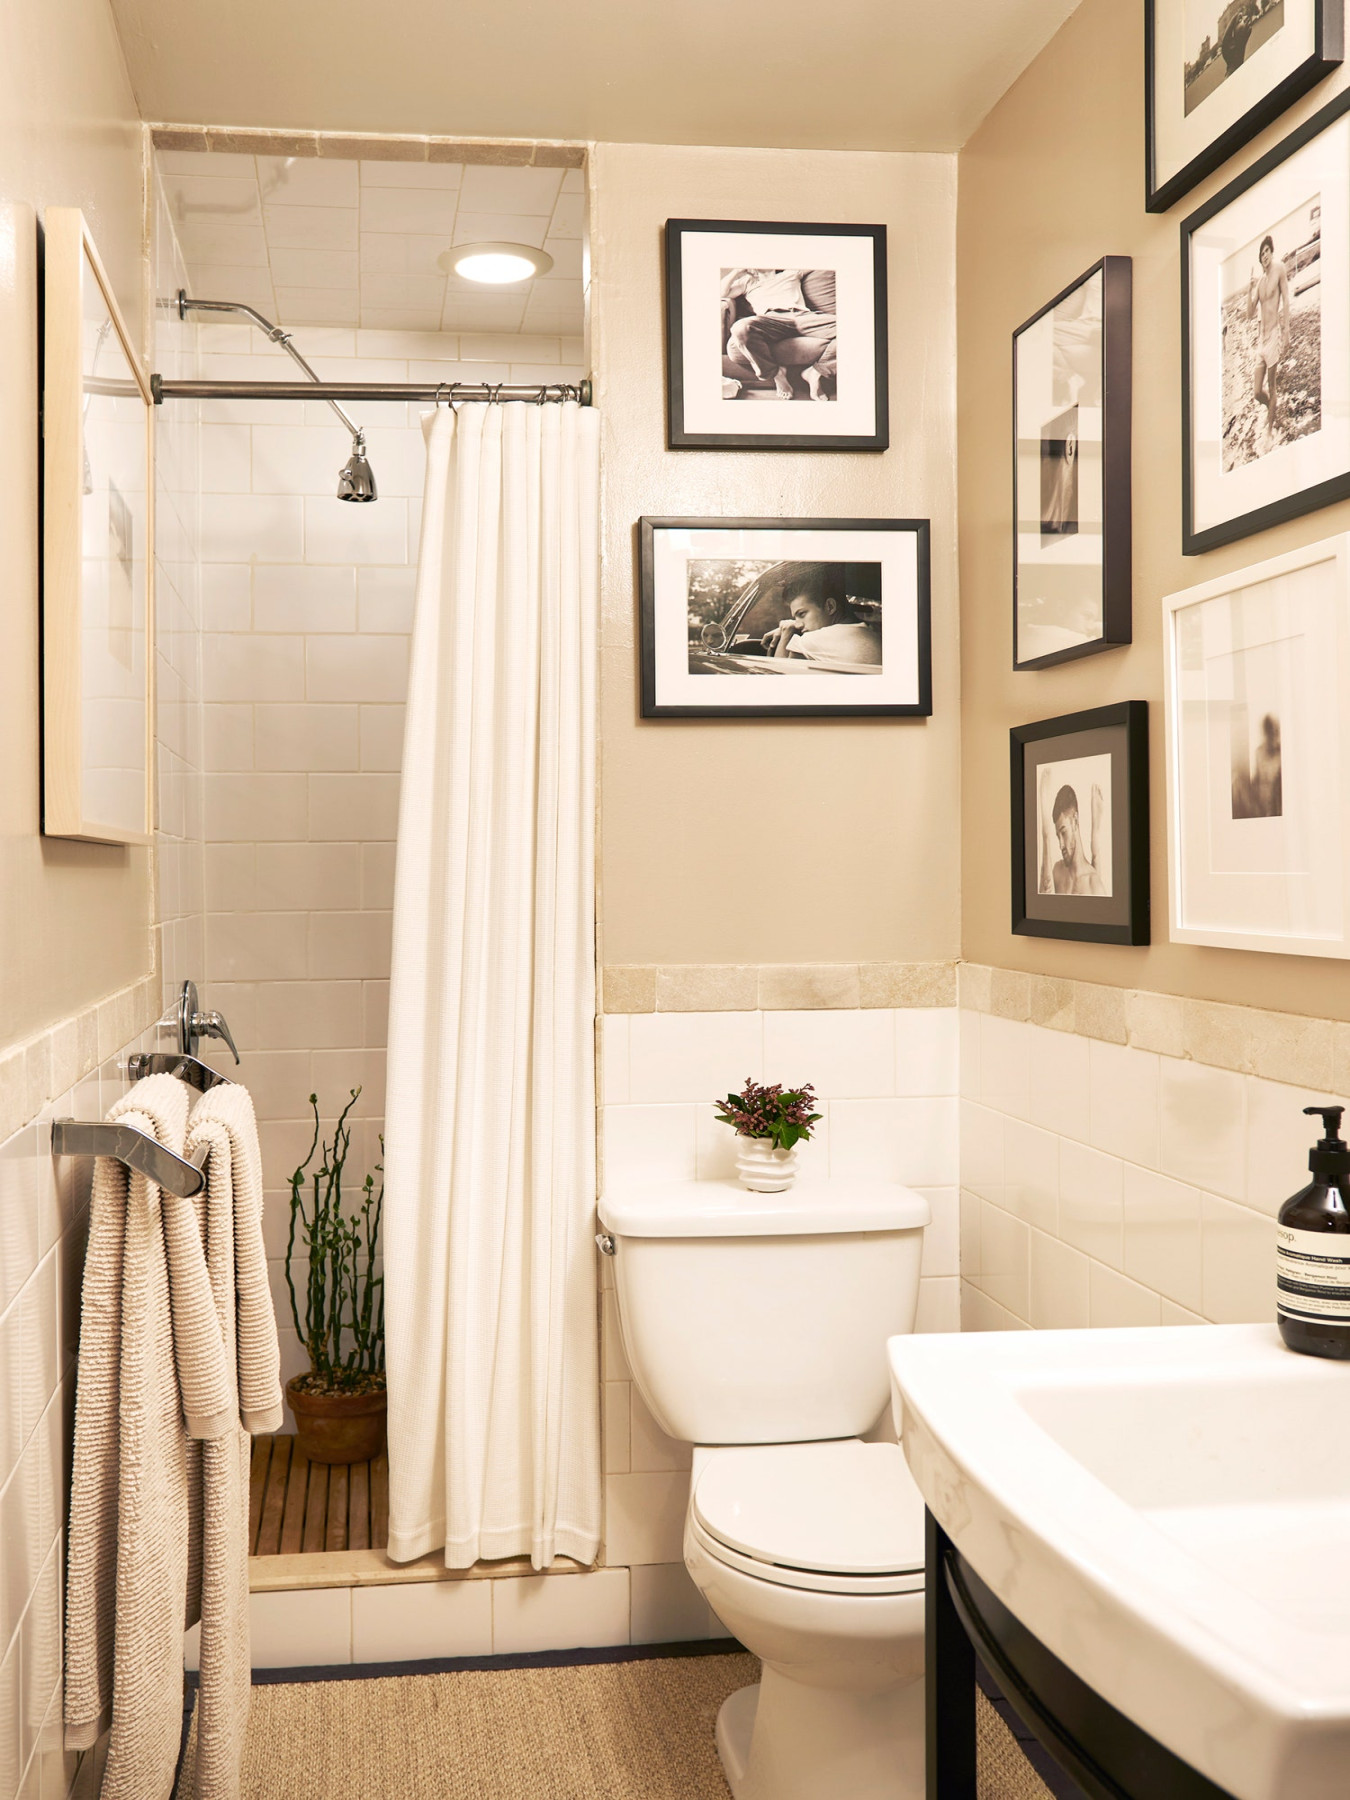 Small Bathroom Ideas to Make Your Bathroom Feel Bigger